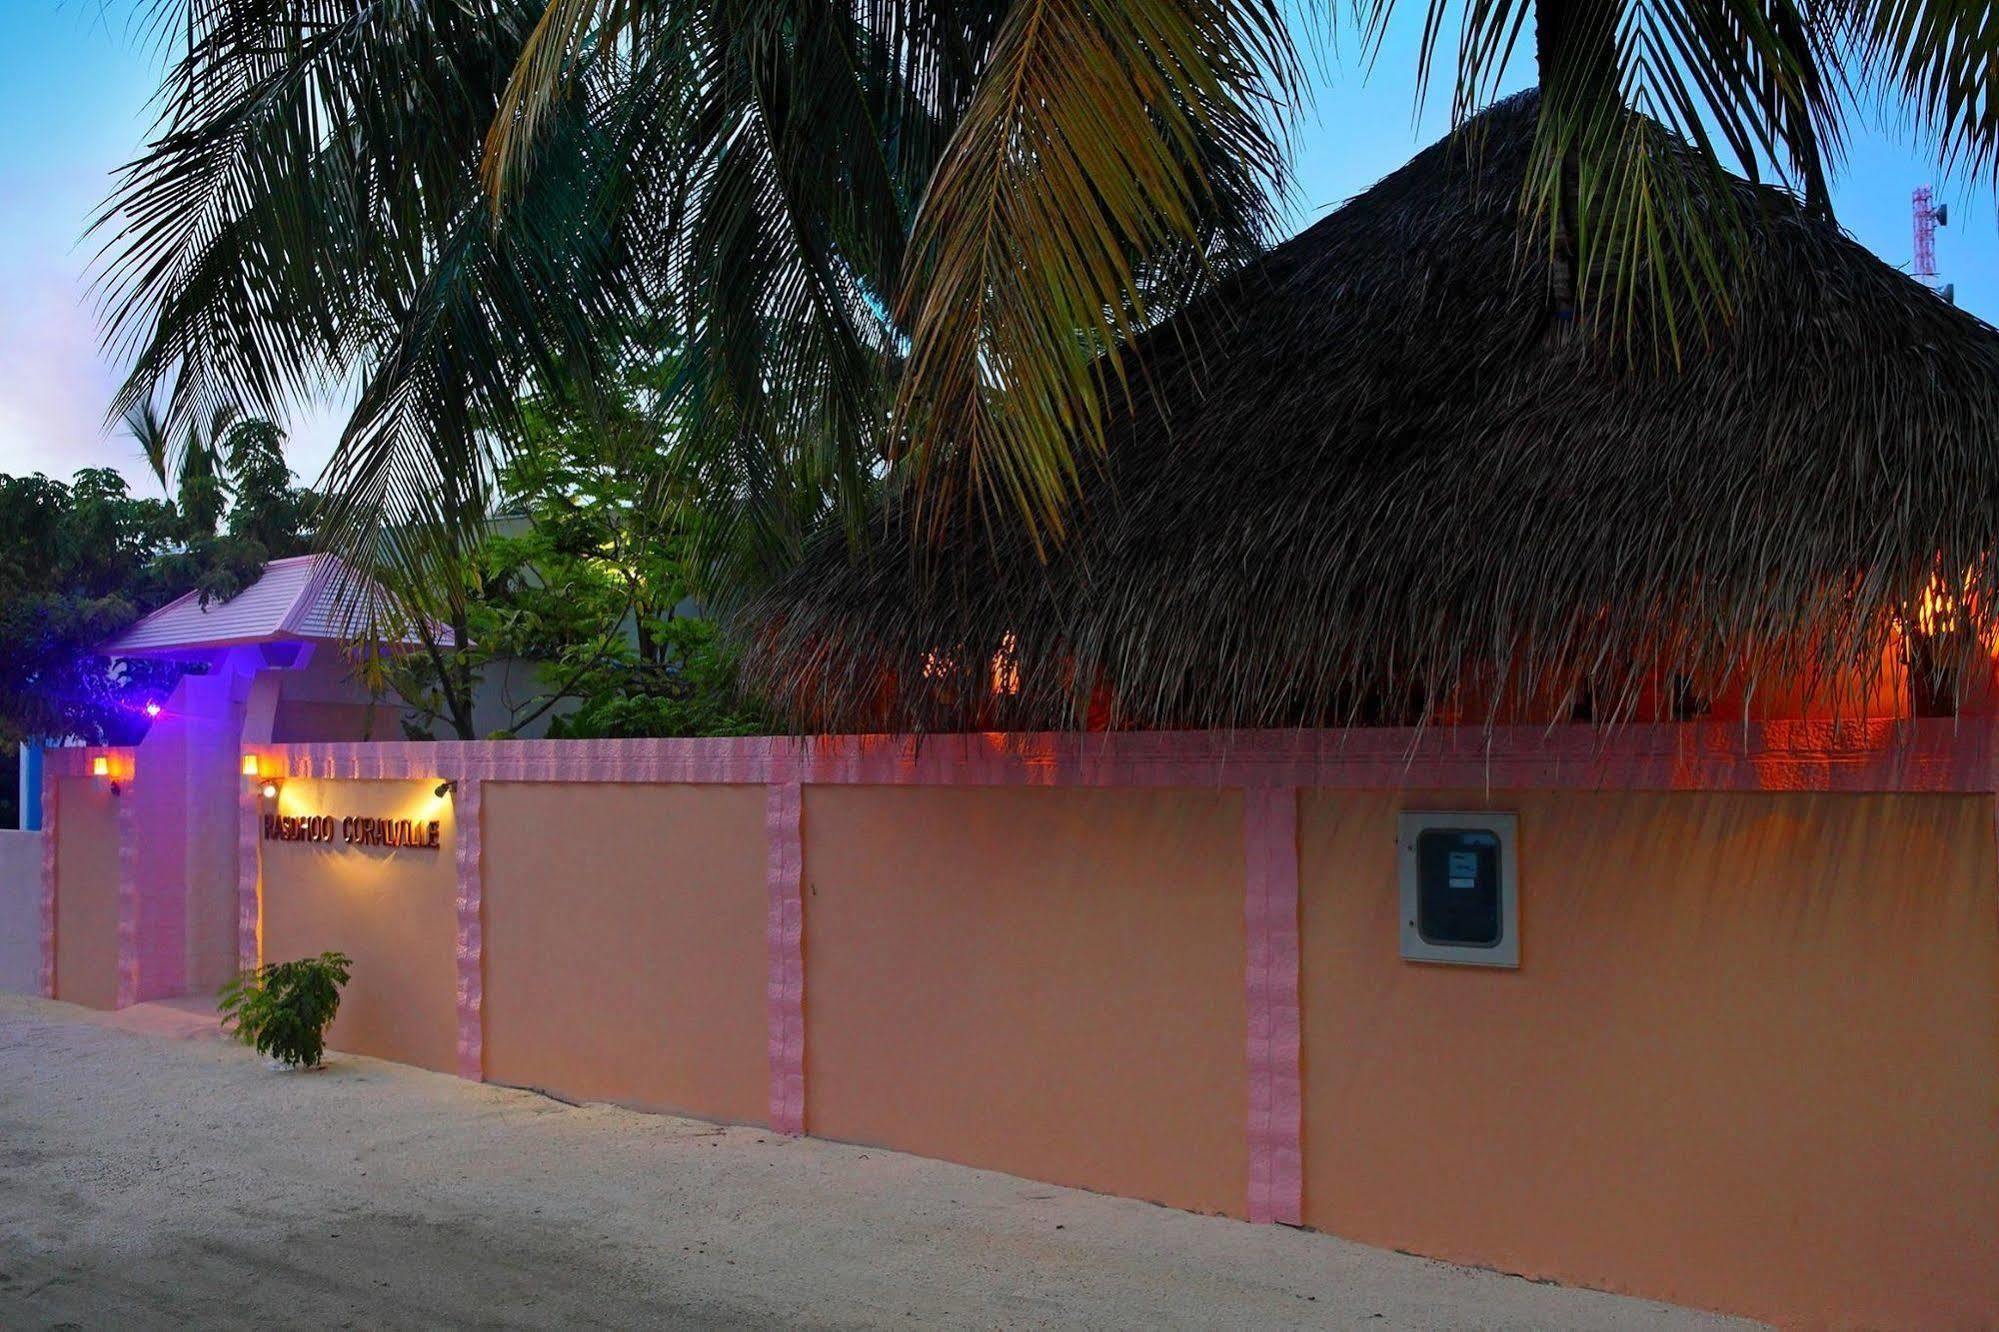 Rasdhoo Coralville Hotel Maldives Exterior photo